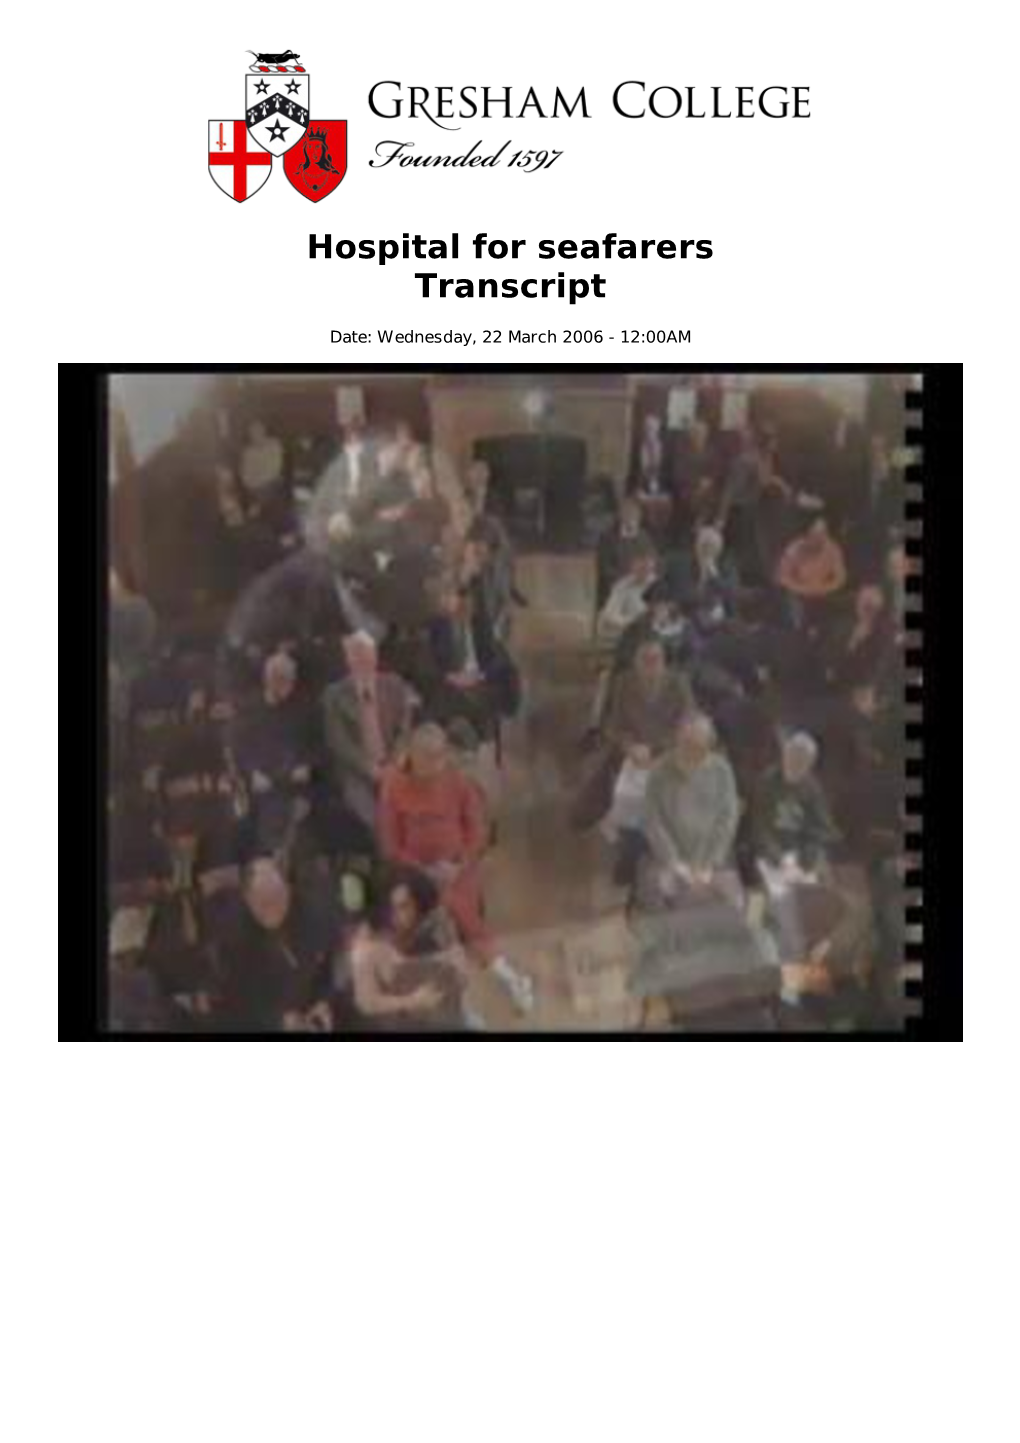 Hospital for Seafarers Transcript